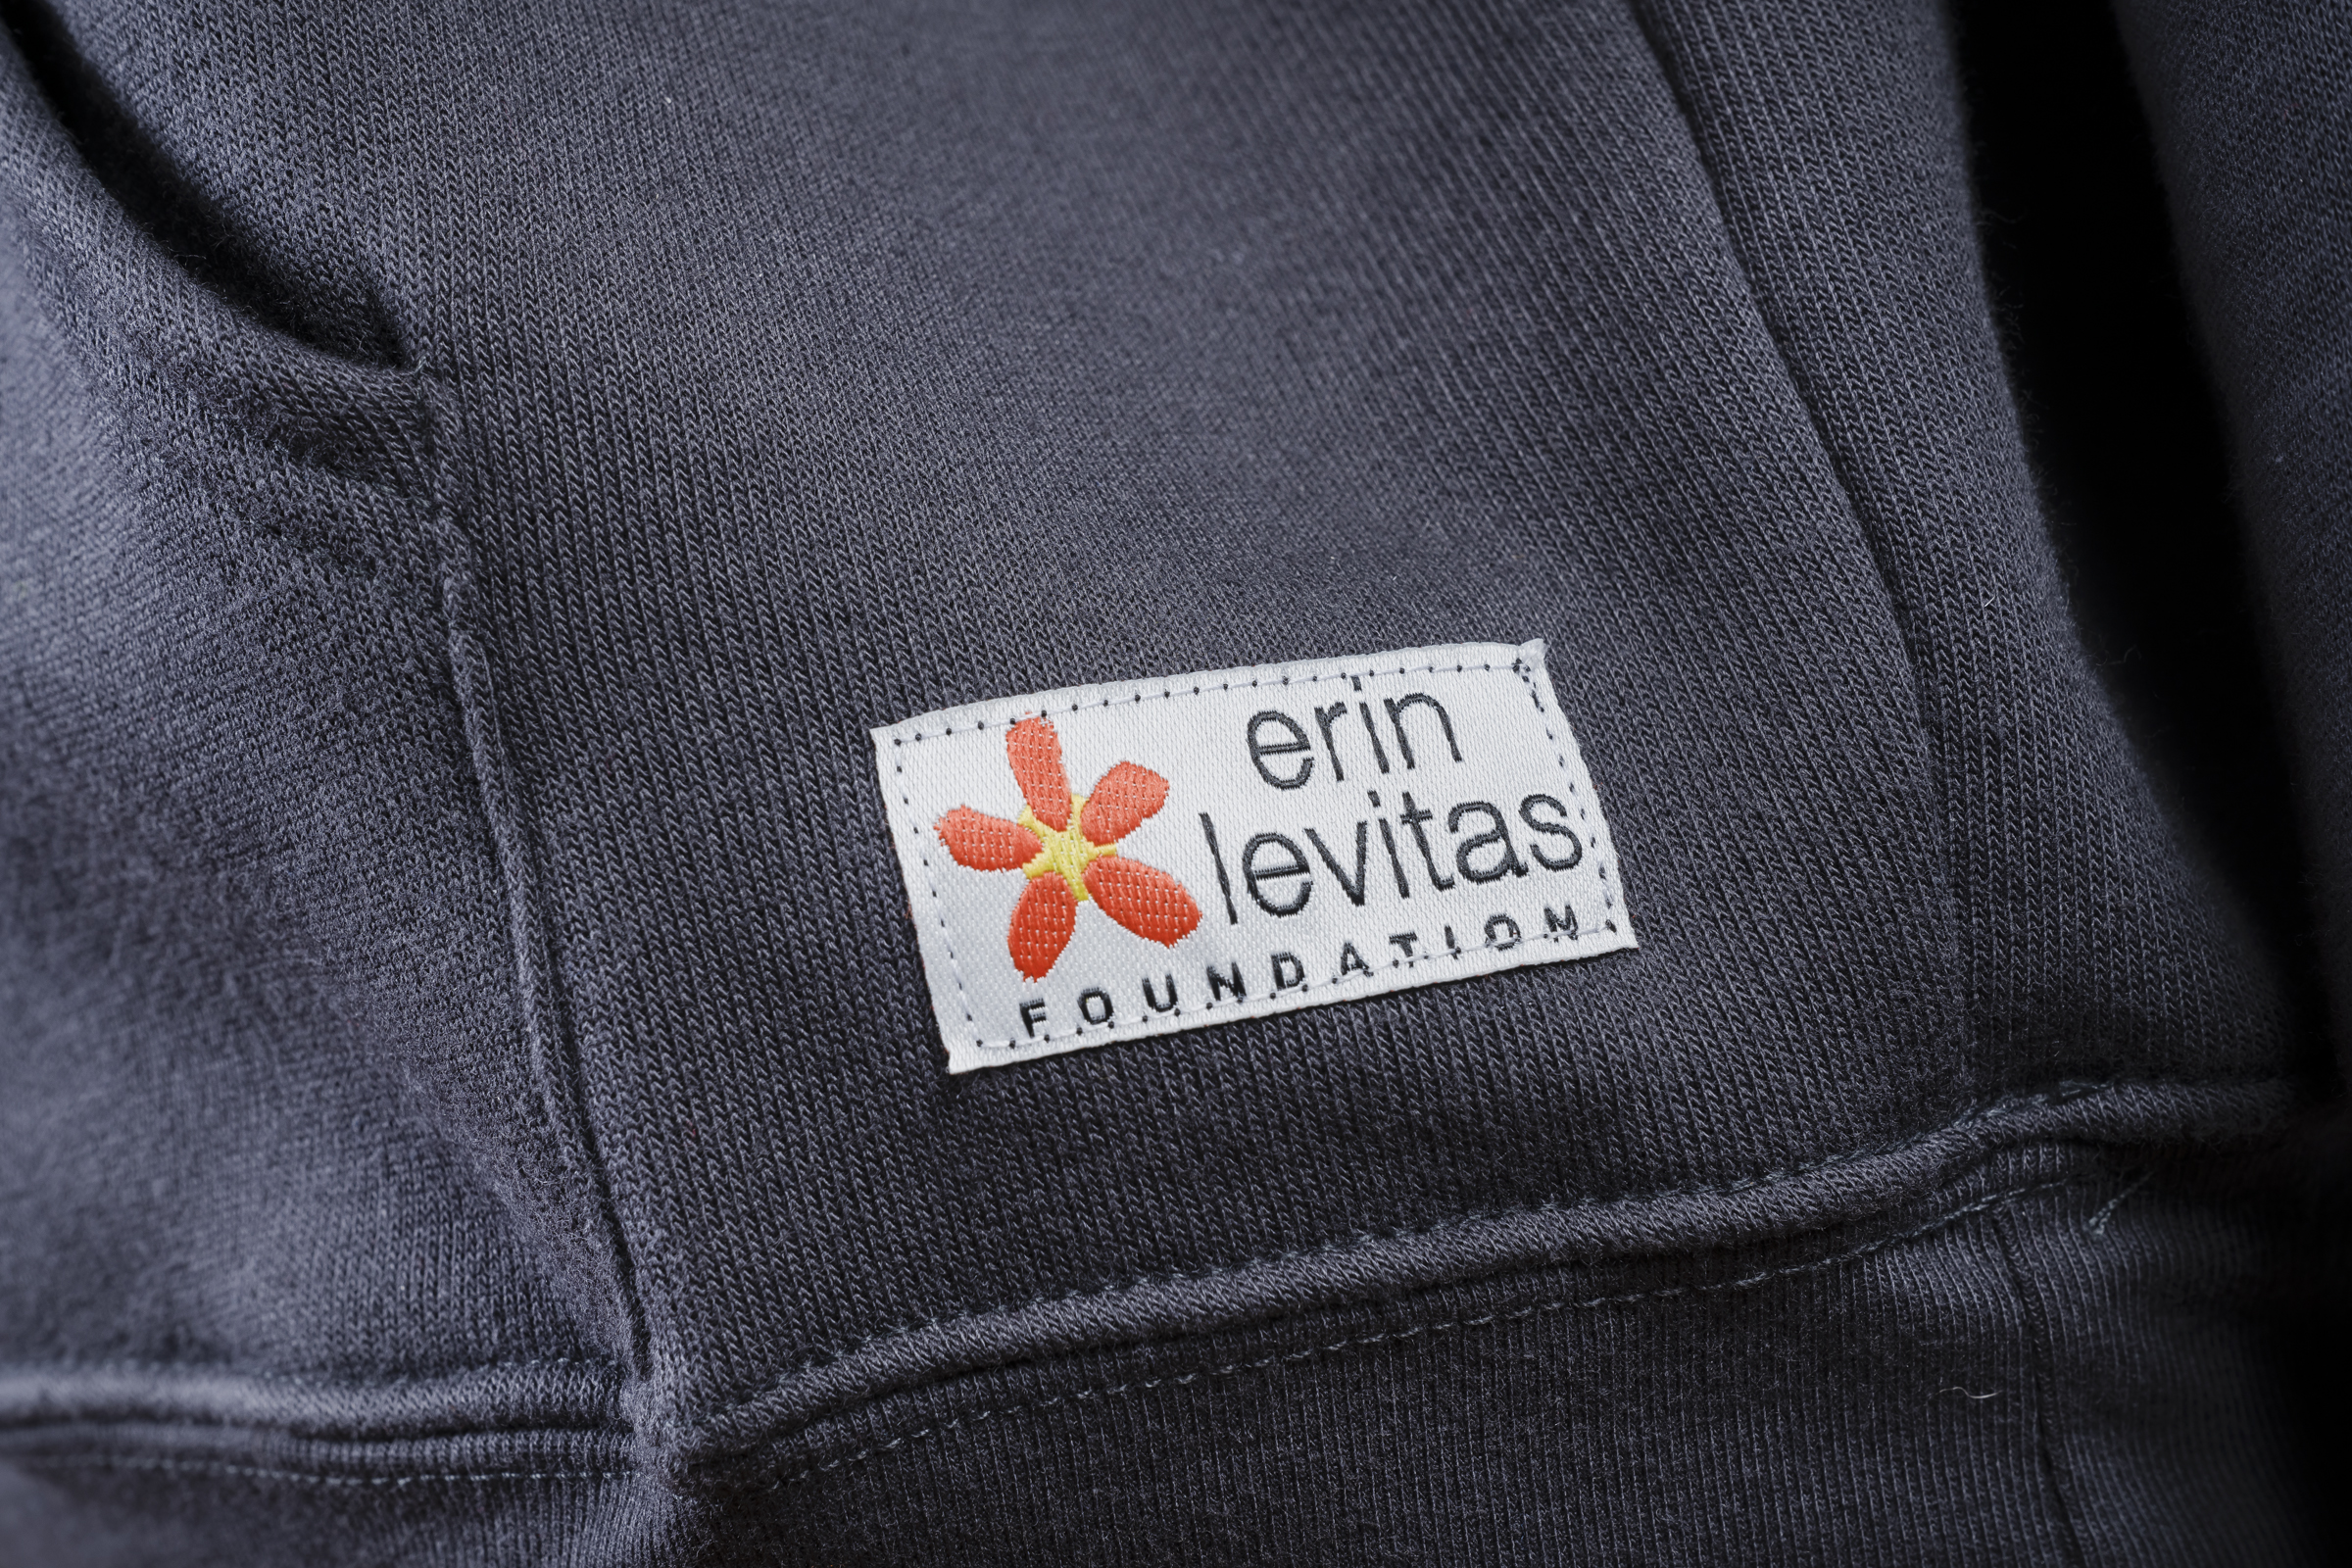 Erin Foundation Levitas - Gray Sweatshirt Logo with